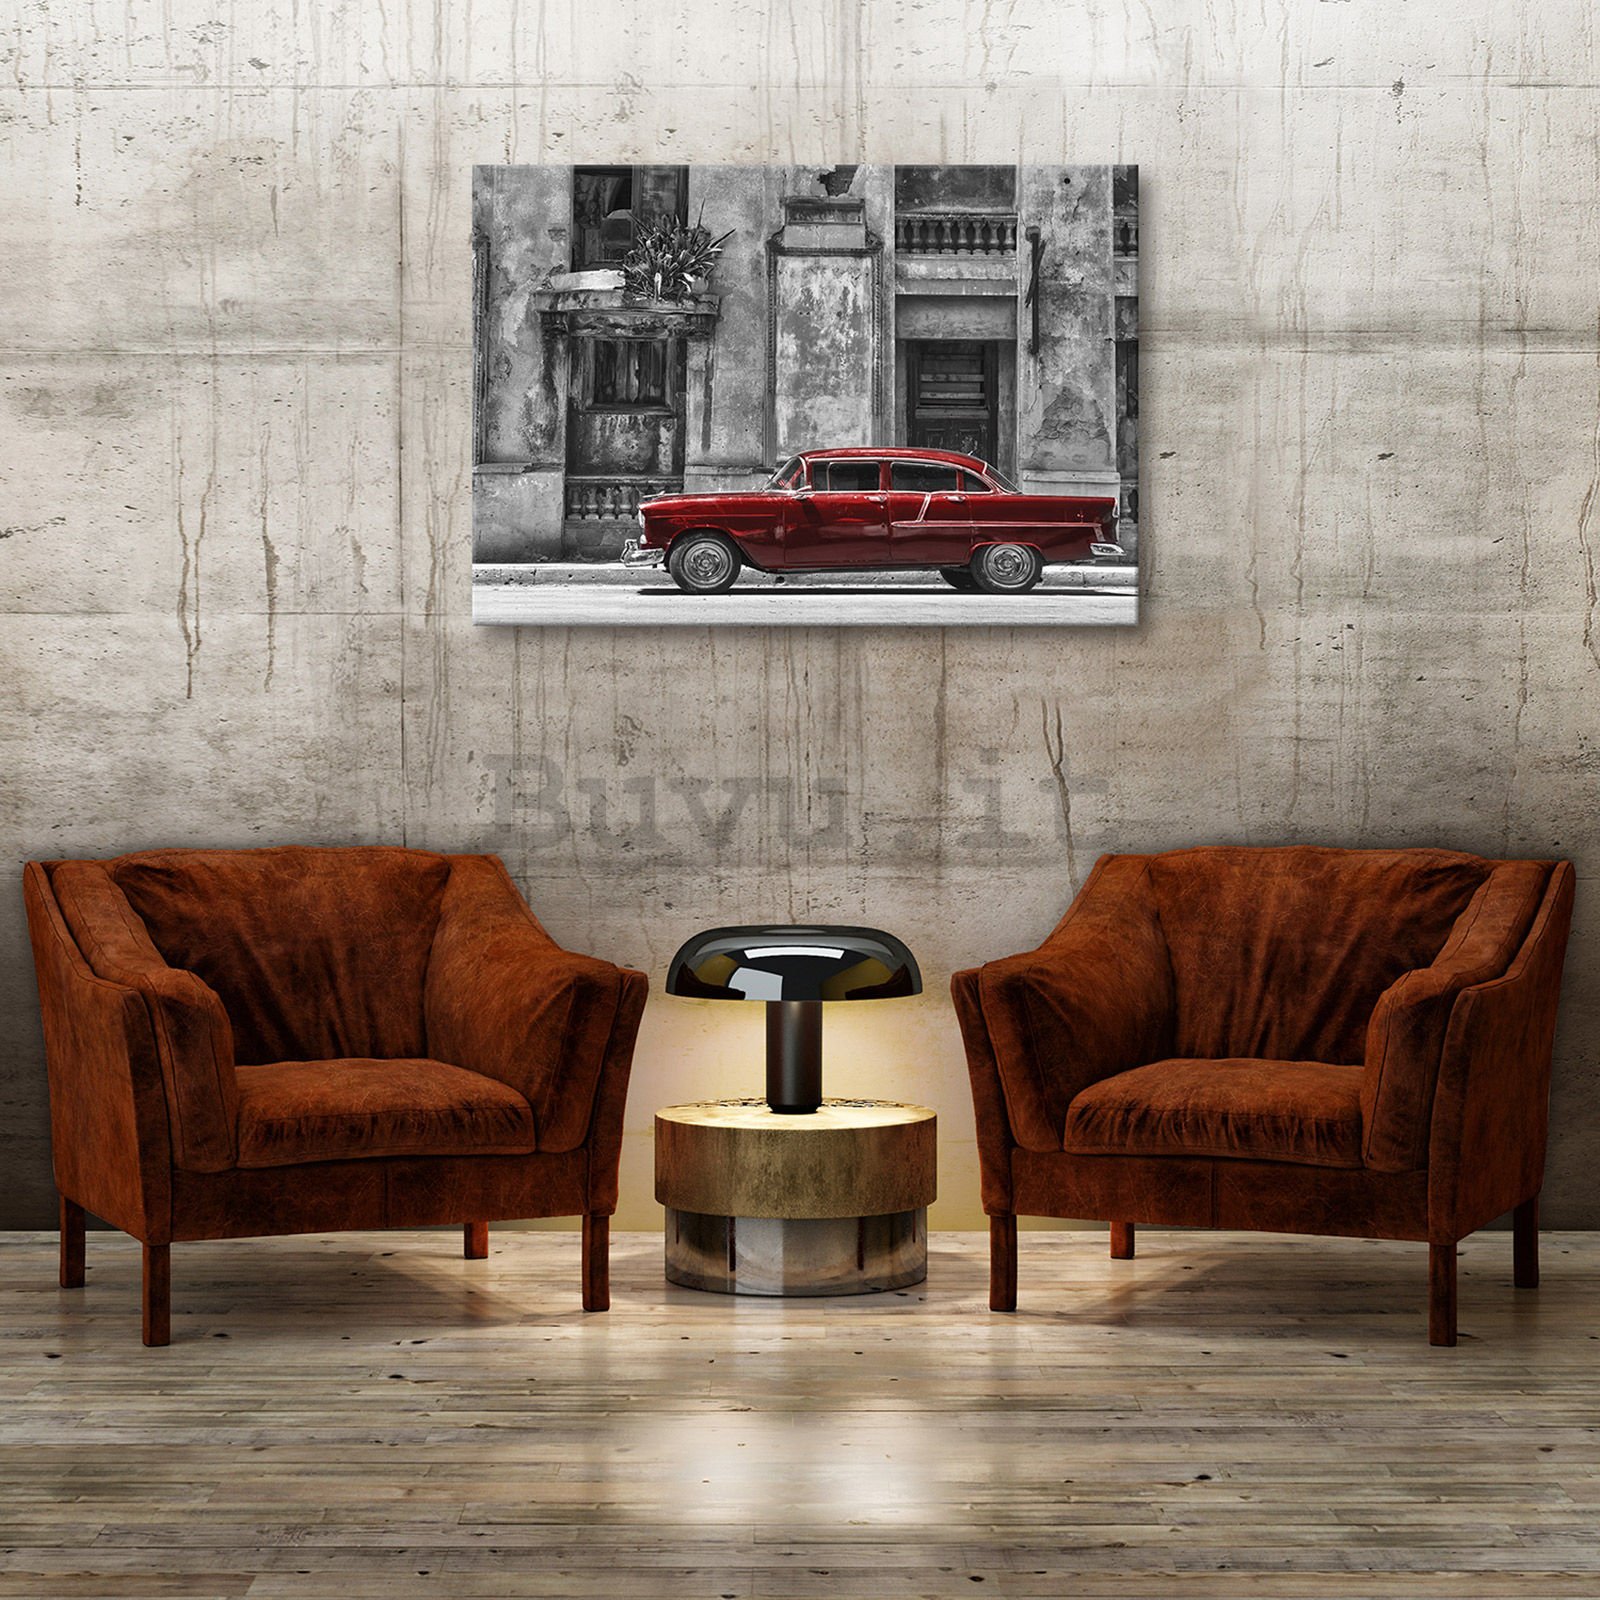 Quadro su tela: Automobile cubana rossa - 100x75 cm